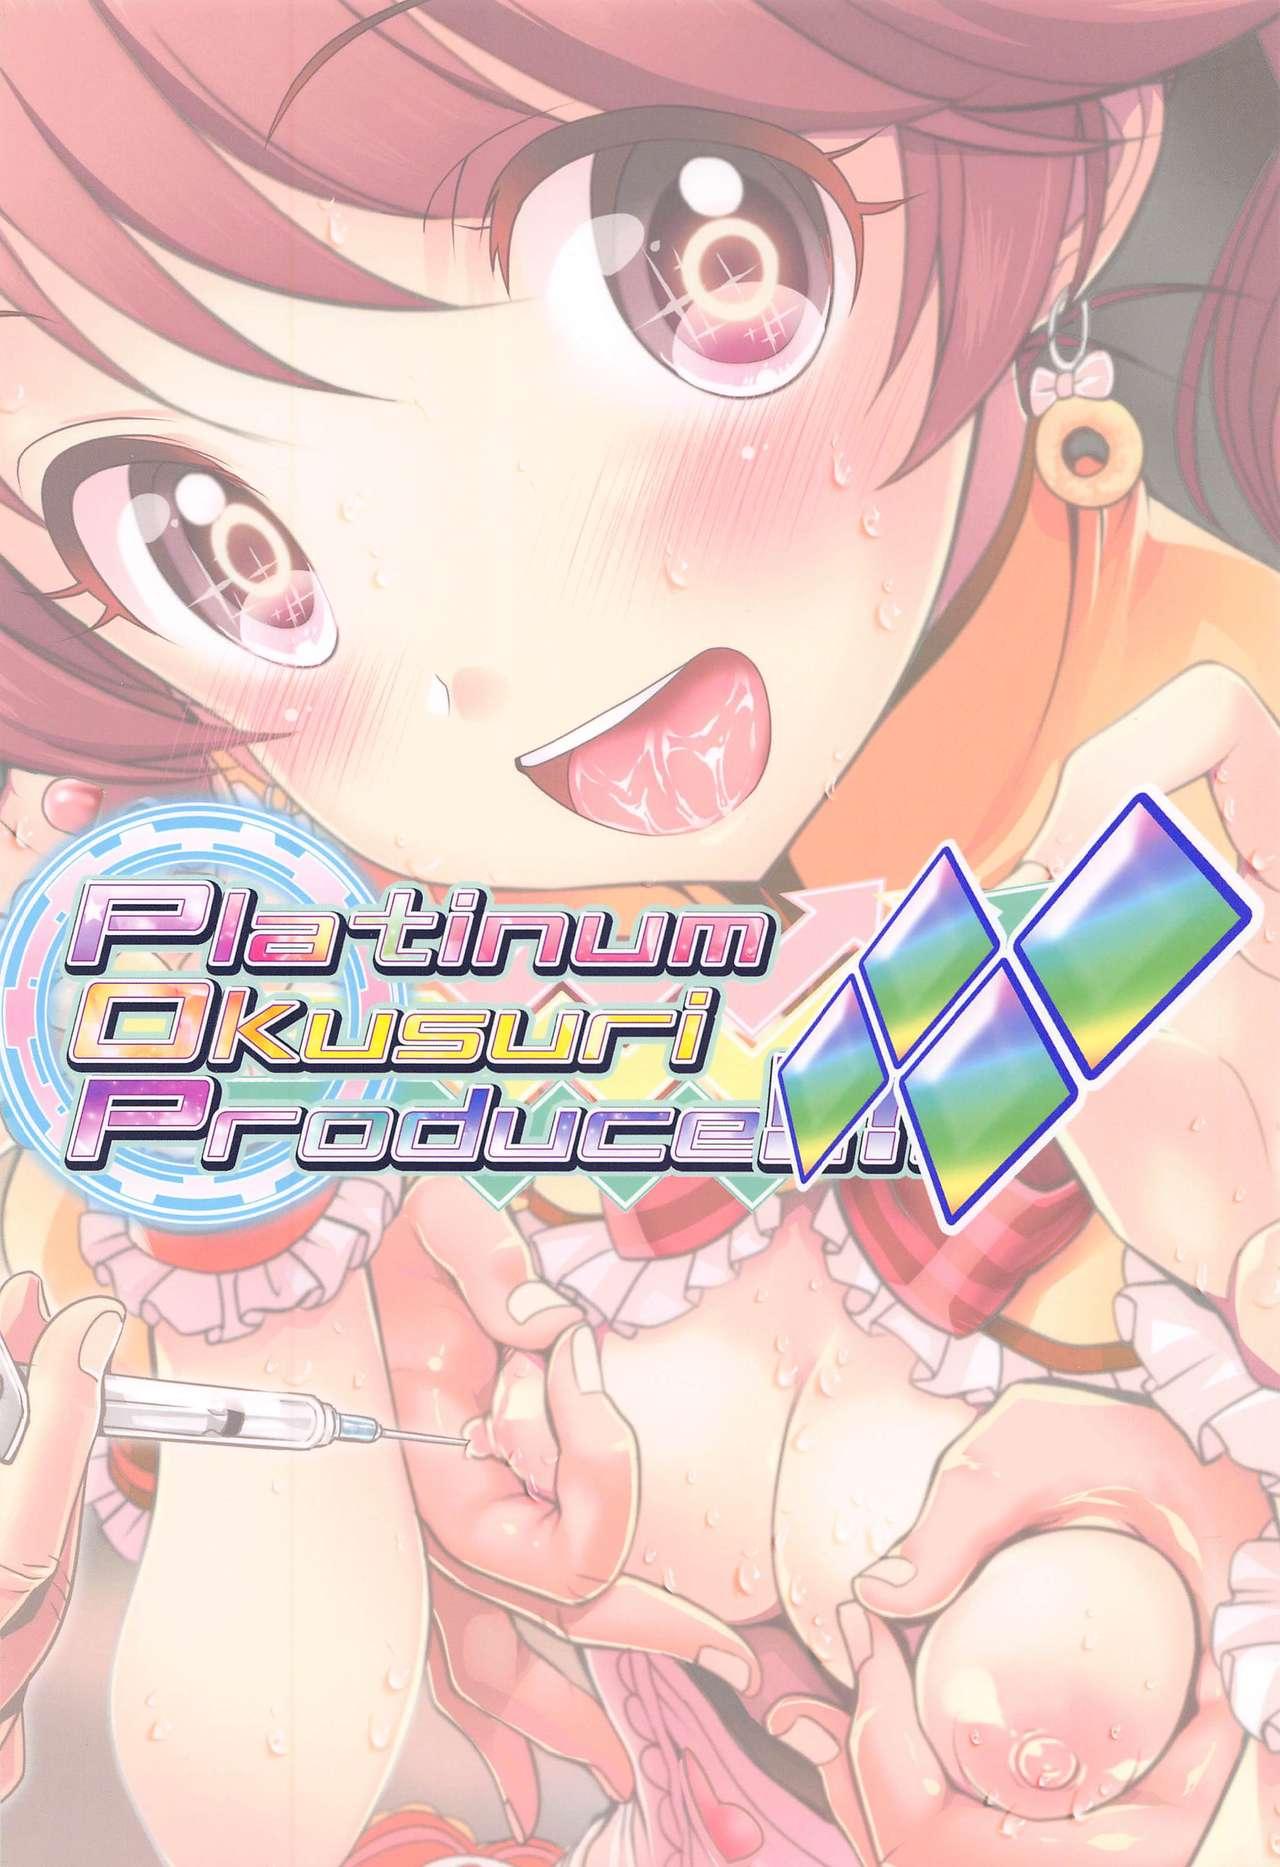 Platinum Okusuri Produce!!!! ◇◇◇◇ 17